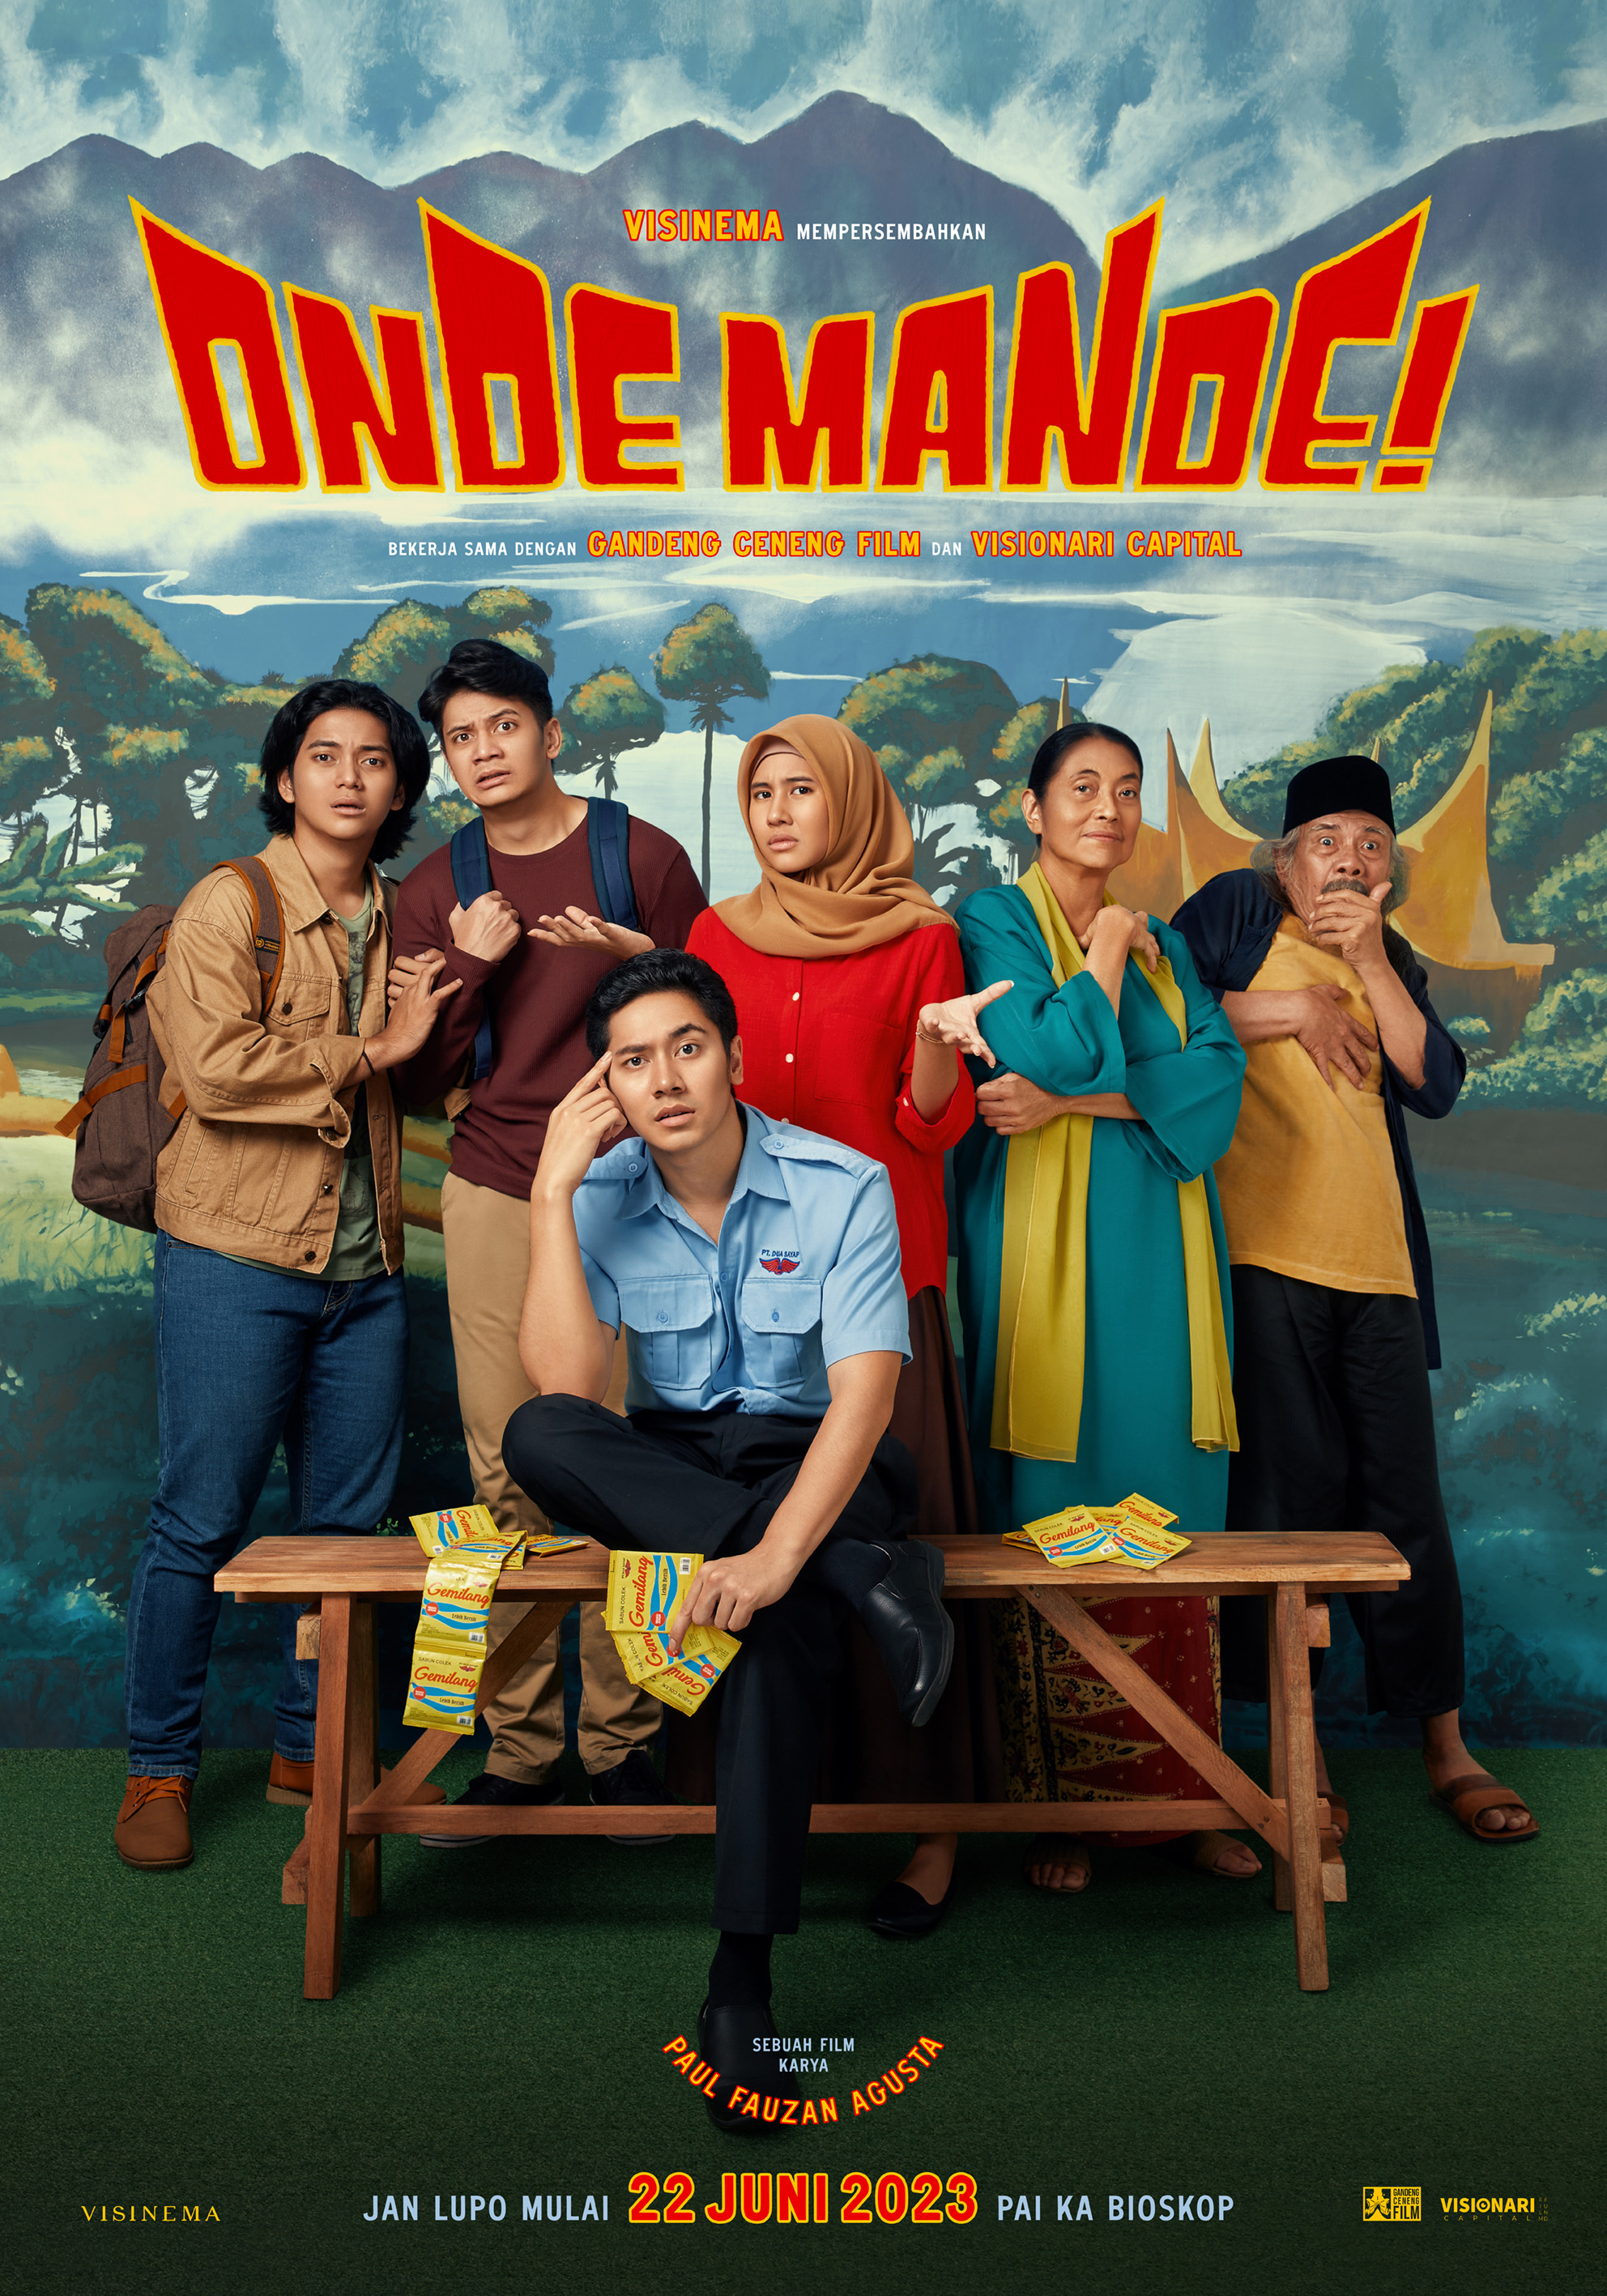 Mega Sized Movie Poster Image for Onde Mande! (#1 of 8)